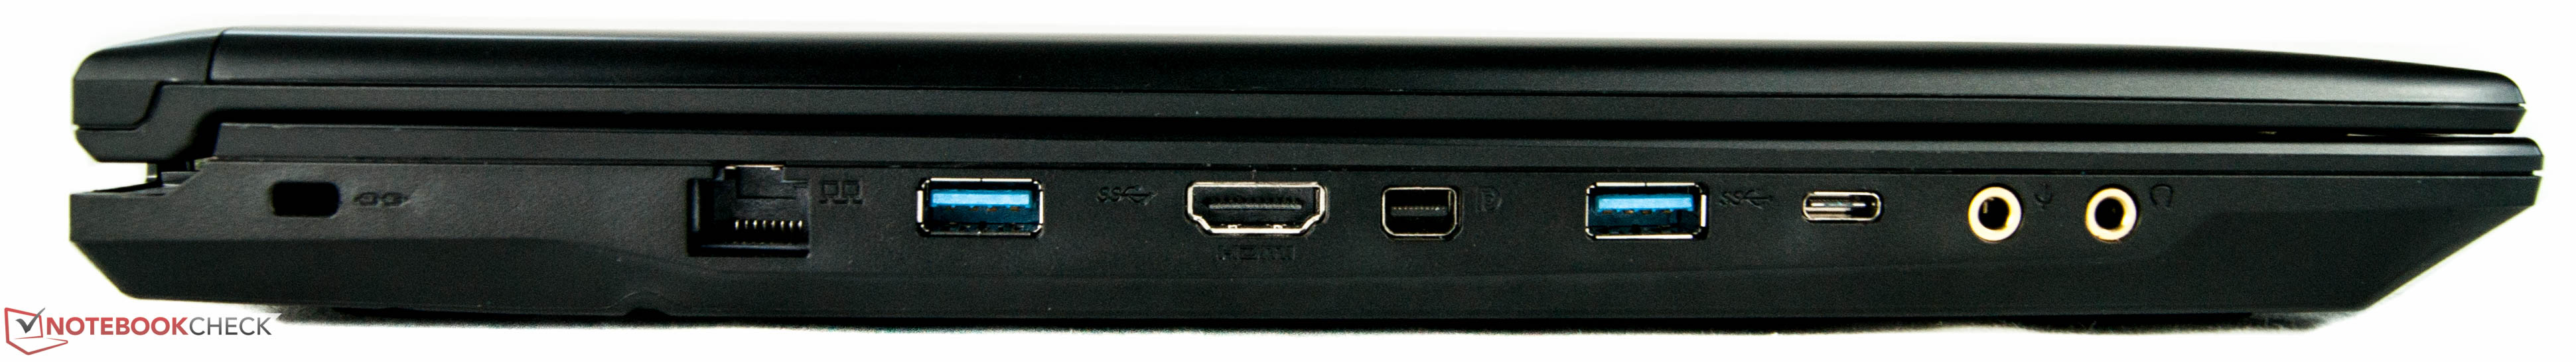 left: Kensington lock, Ethernet port, USB 3.0, HDMI connector, Mini DisplayPort, USB 3.0, USB Type-C, microphone-in, headphone jack